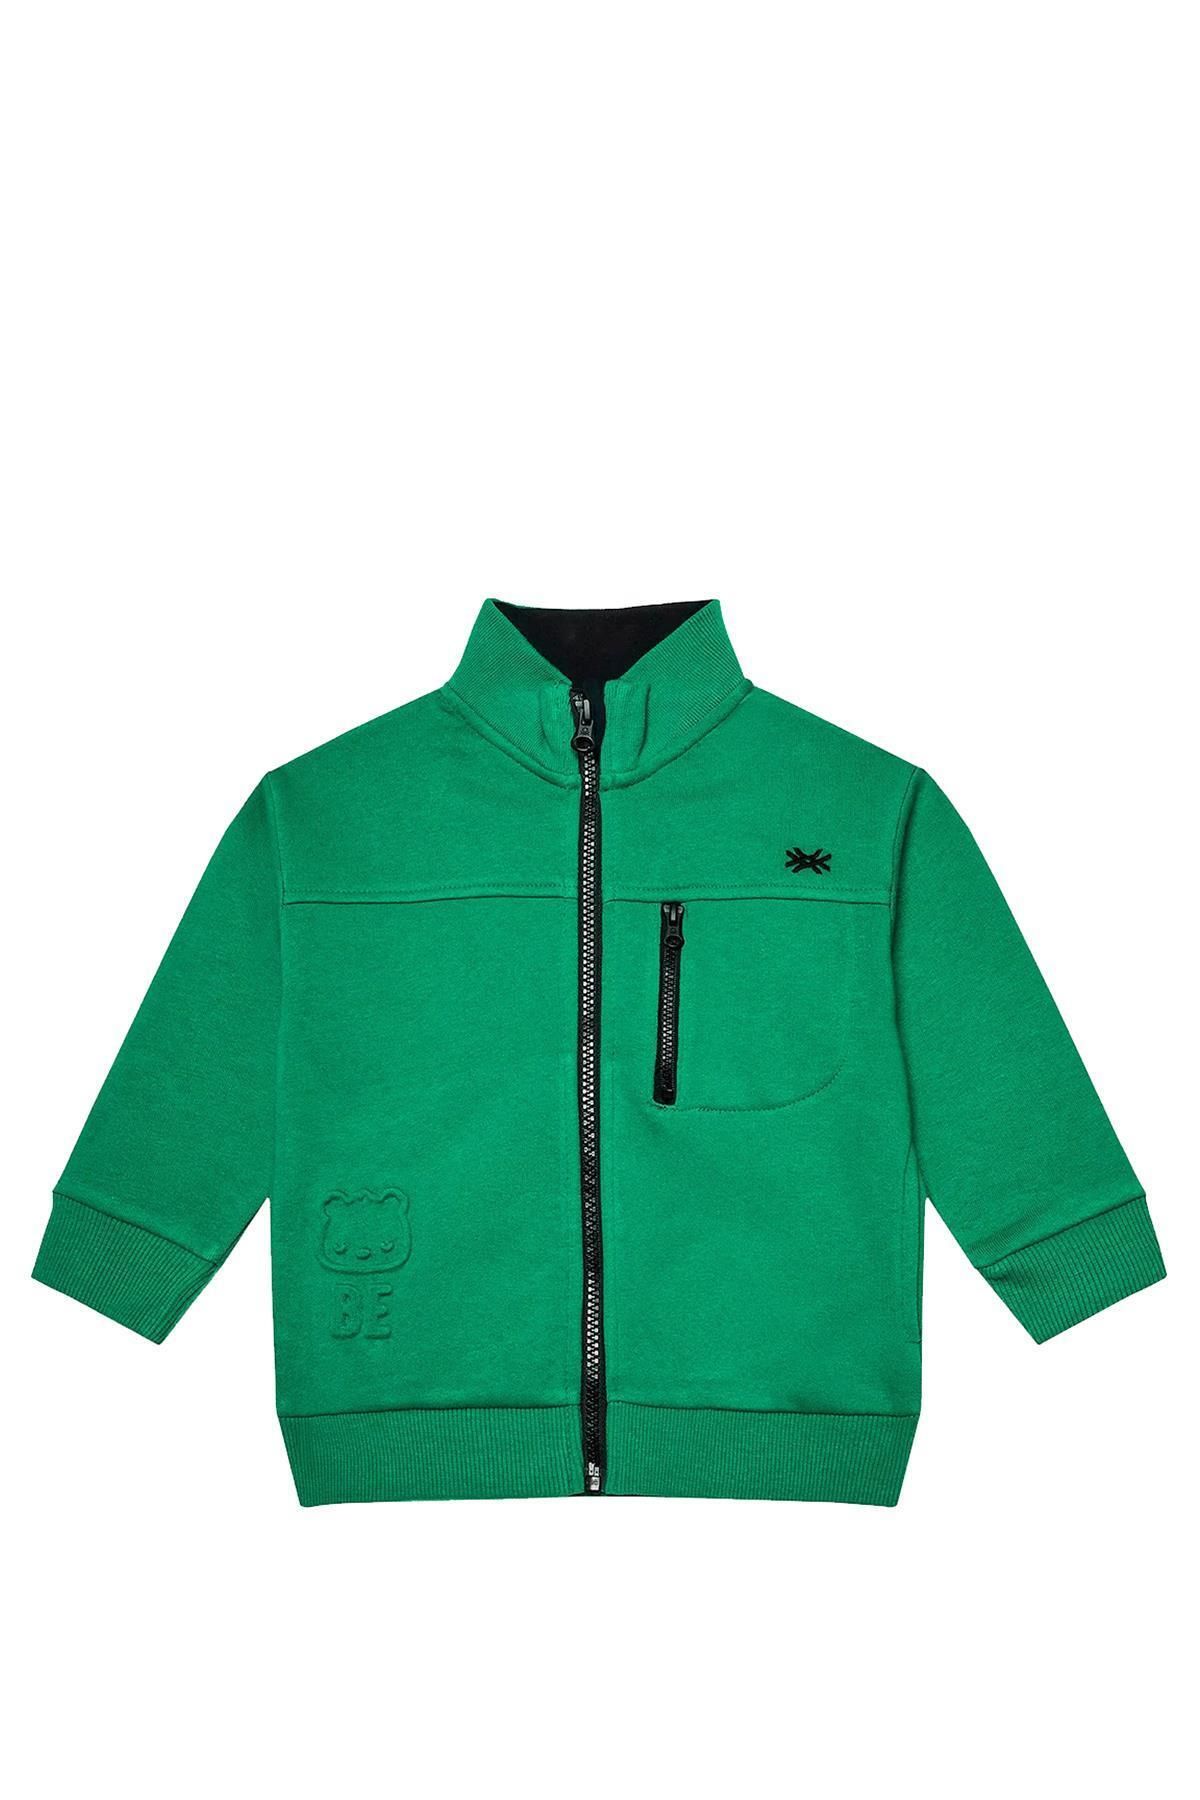 United Colors of Benetton Erkek Çocuk Sweatshirt 30UNG502N